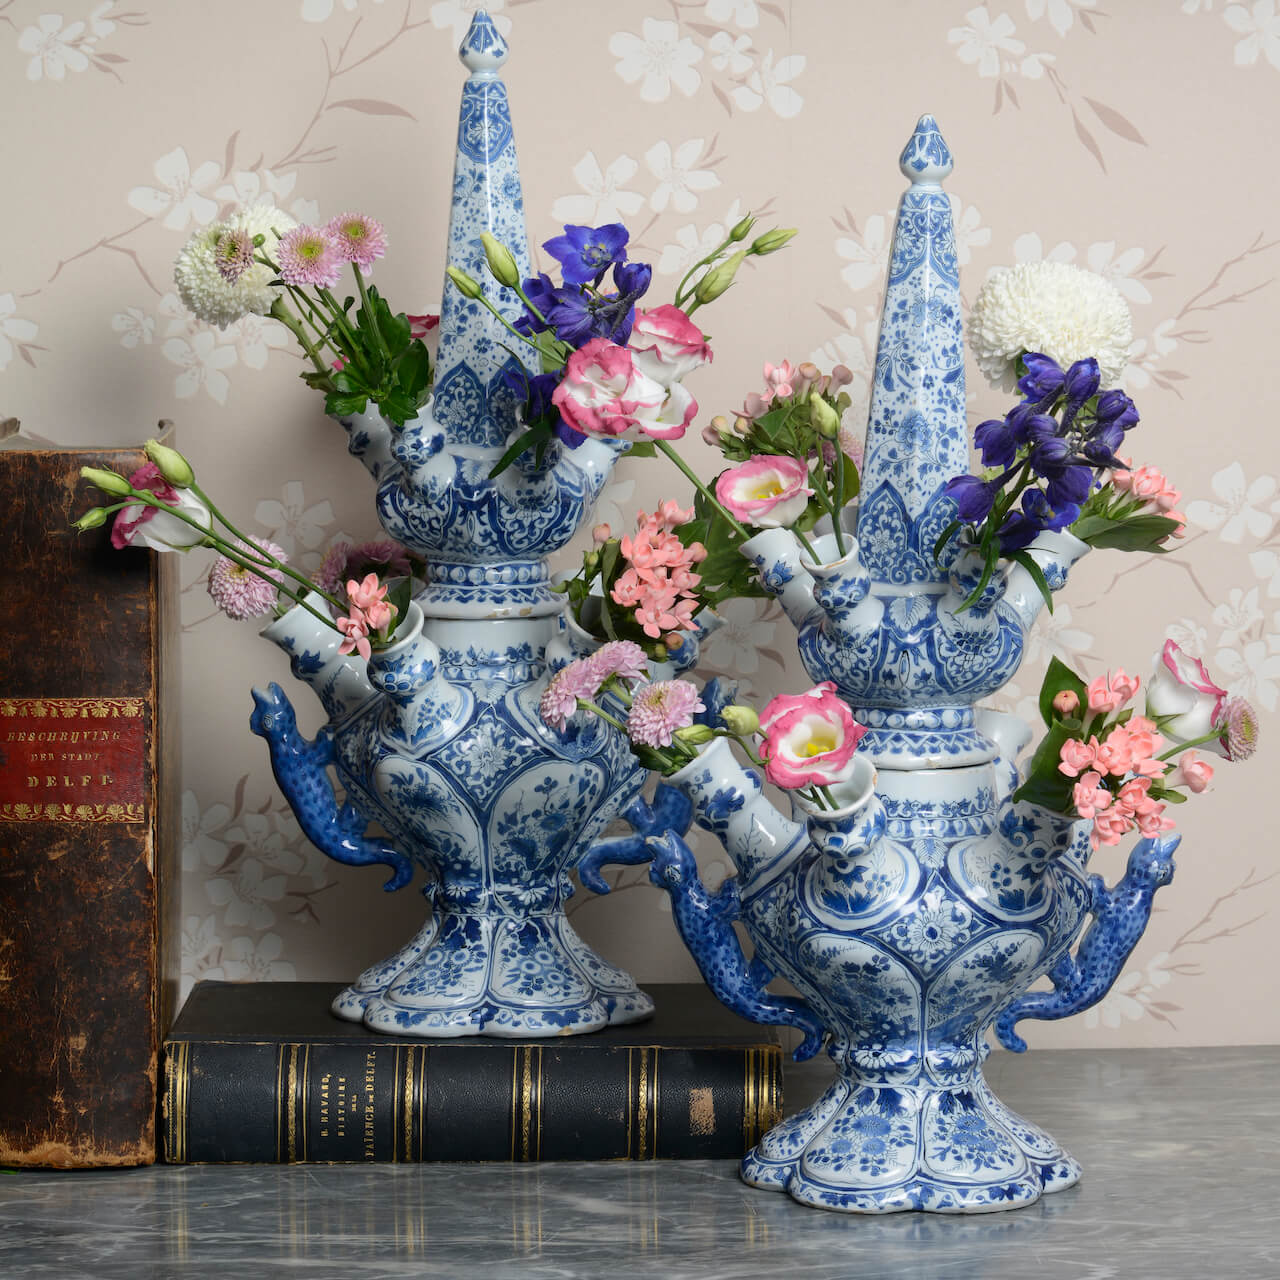 Blue and white Delftware bowl flower vase flowers